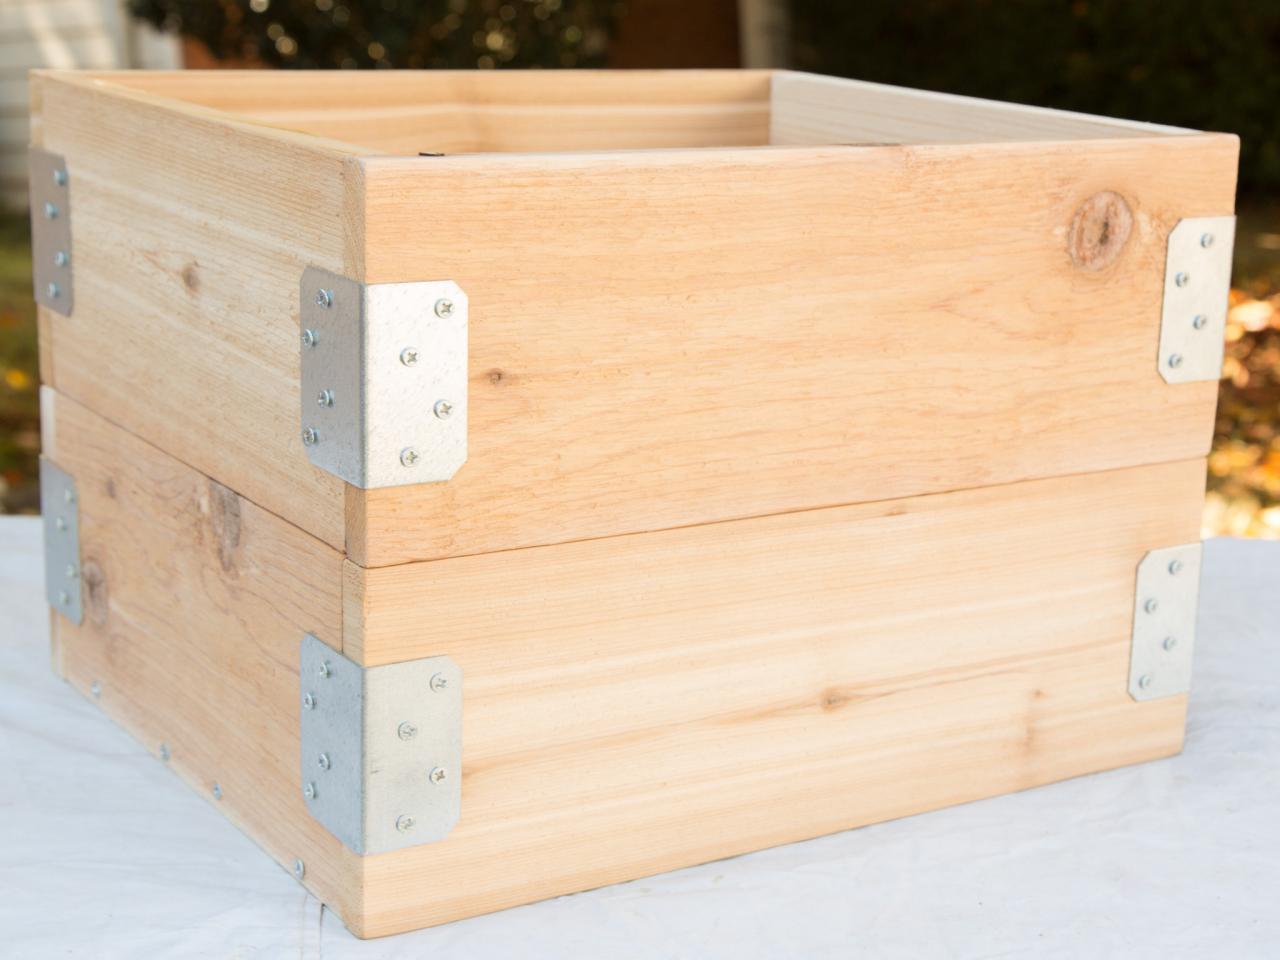 wooden crate toy storage